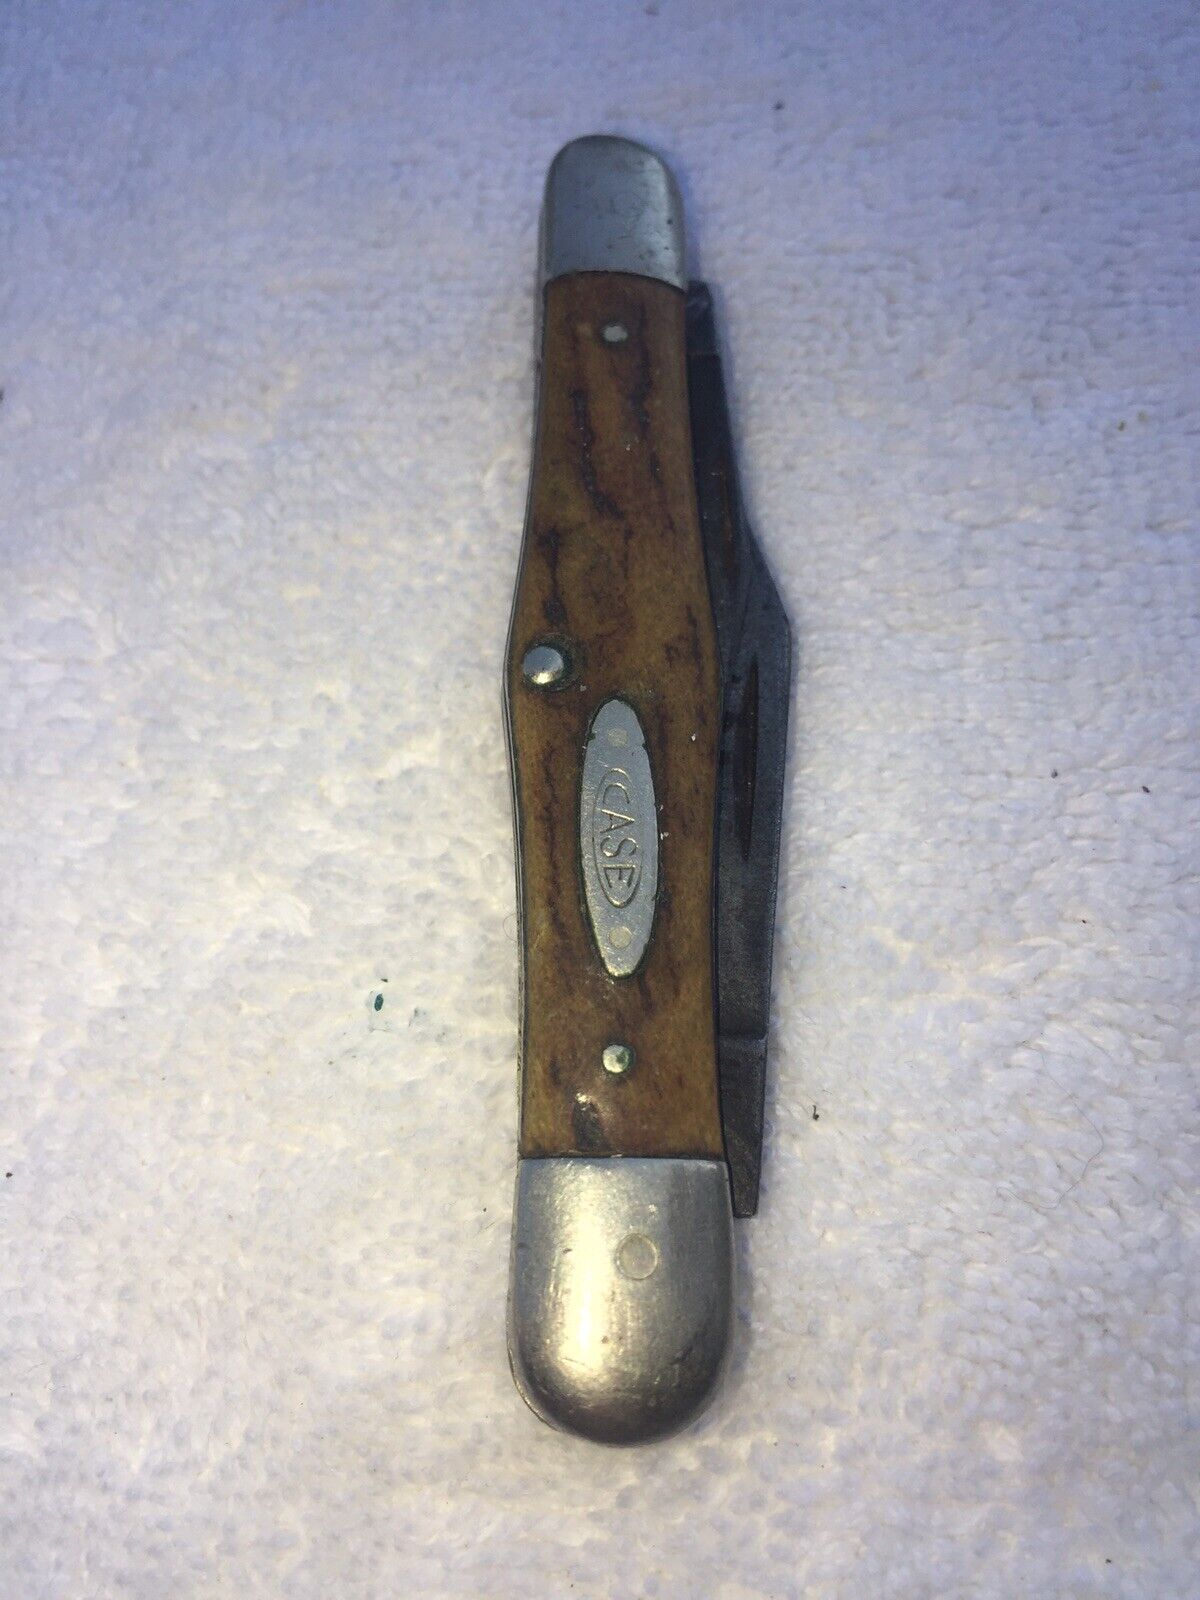 RARE VINTAGE CASE XX STAG WHITTLER KNIFE 5383 1940-64 3 Blades - Good Condition